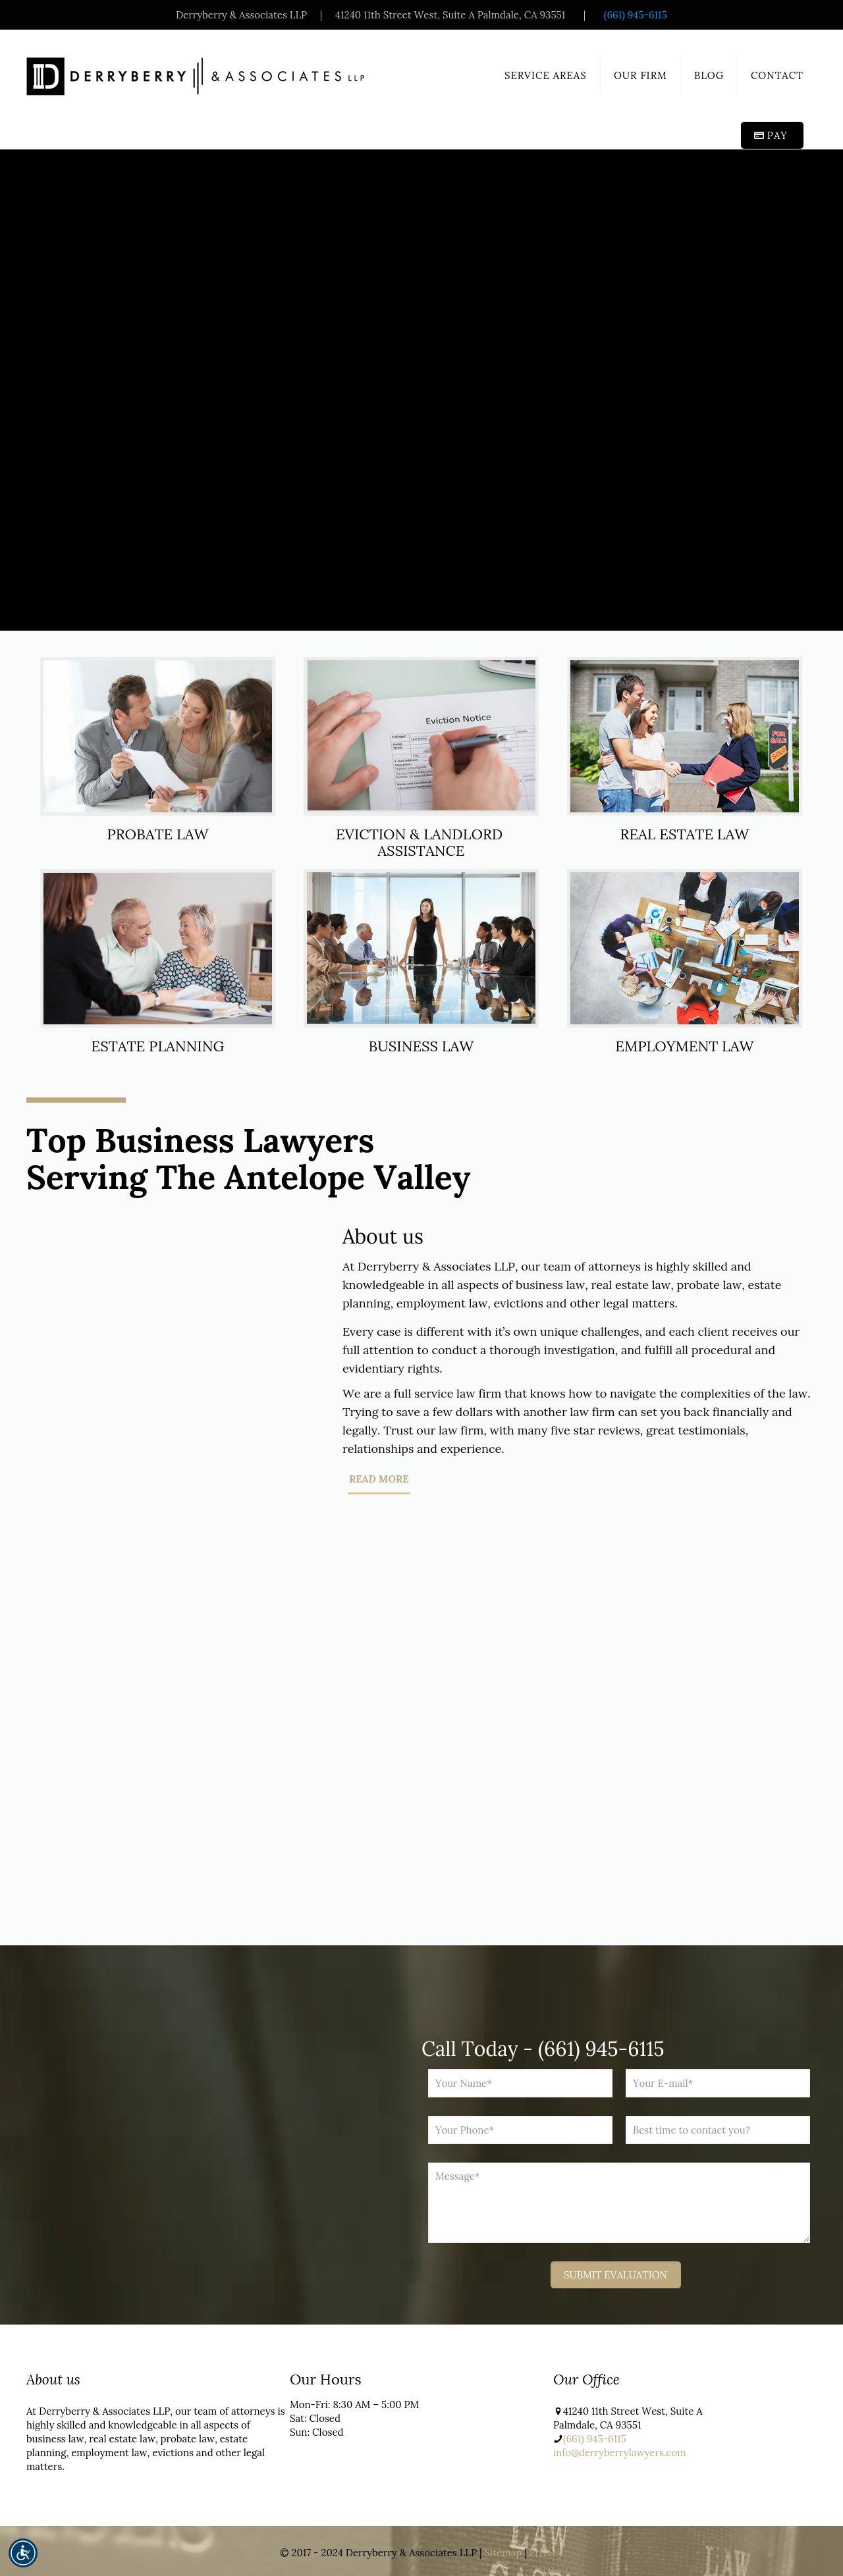 Kestler - Derryberry LLP - Lancaster CA Lawyers